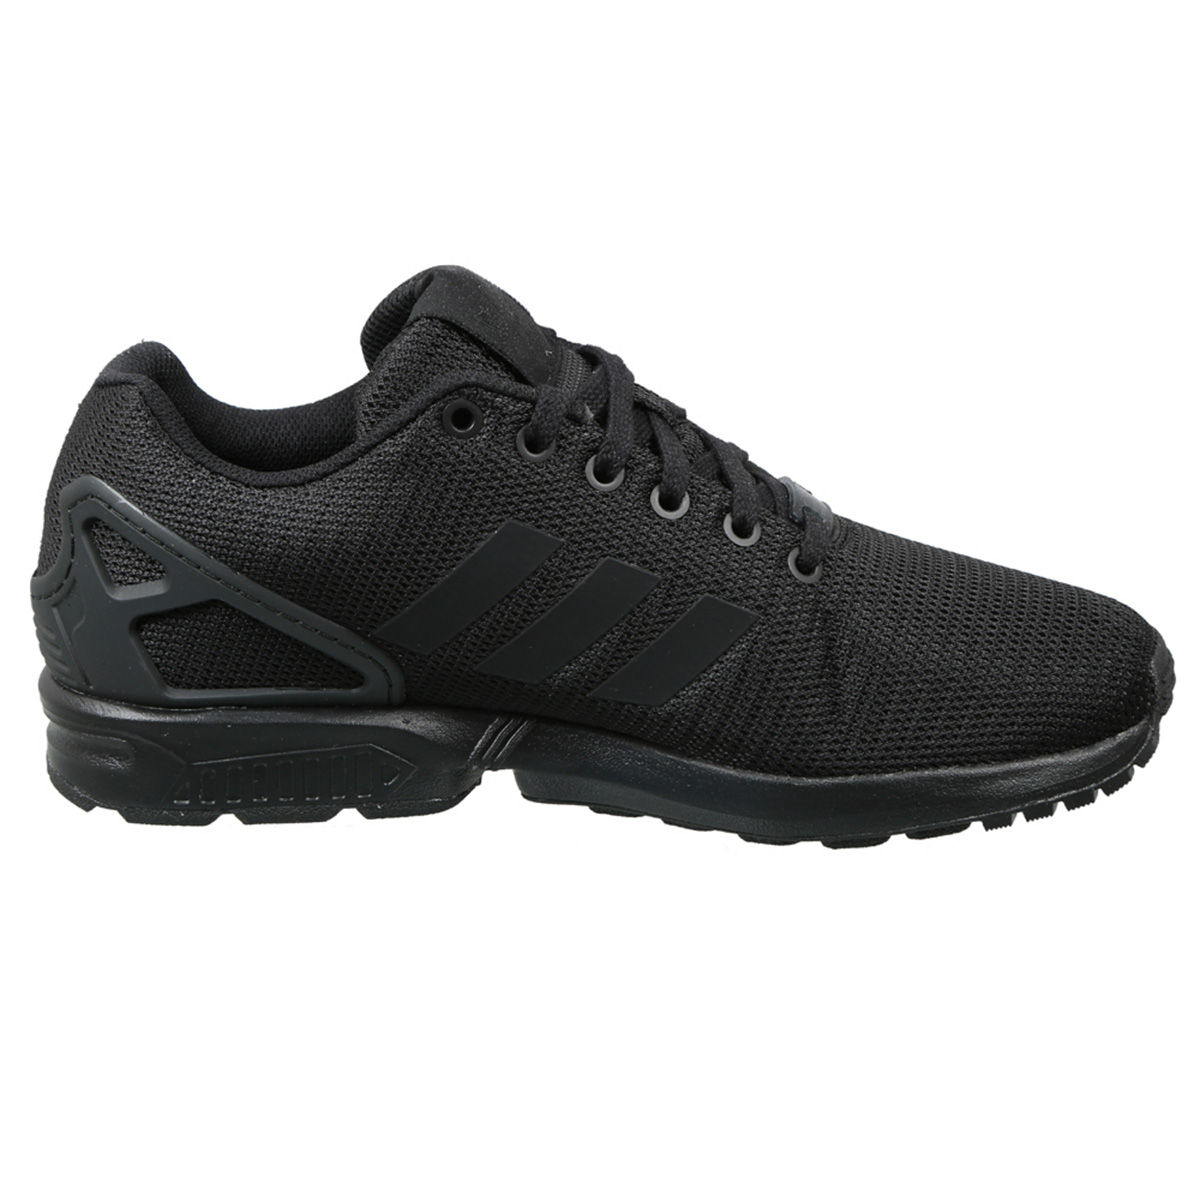 adidas Originals Zx Flux Black Casual Sneakers